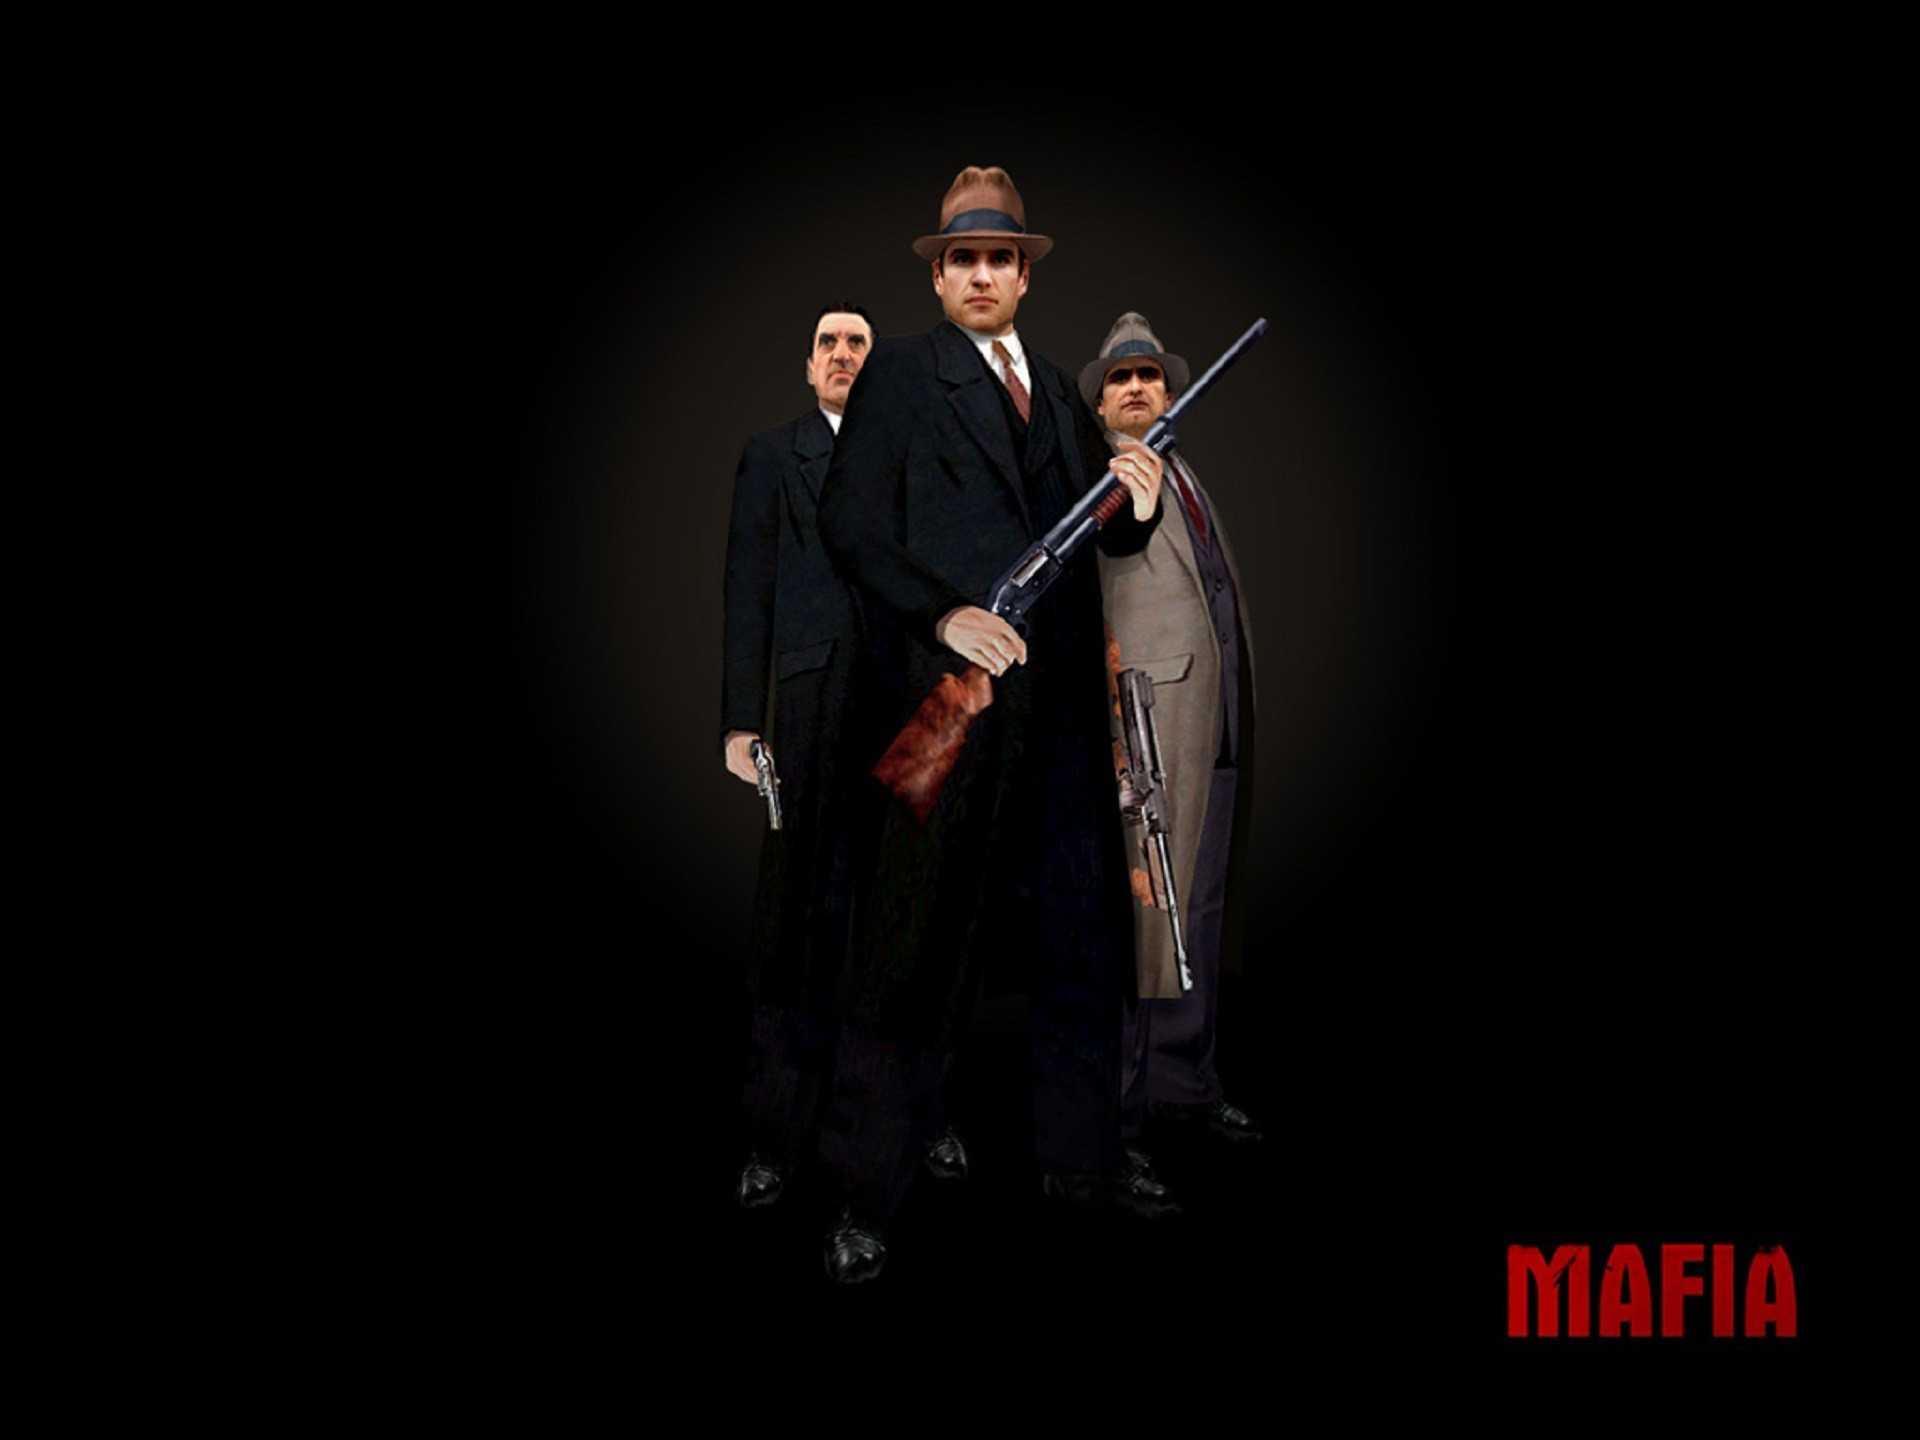 Mafia Wallpapers